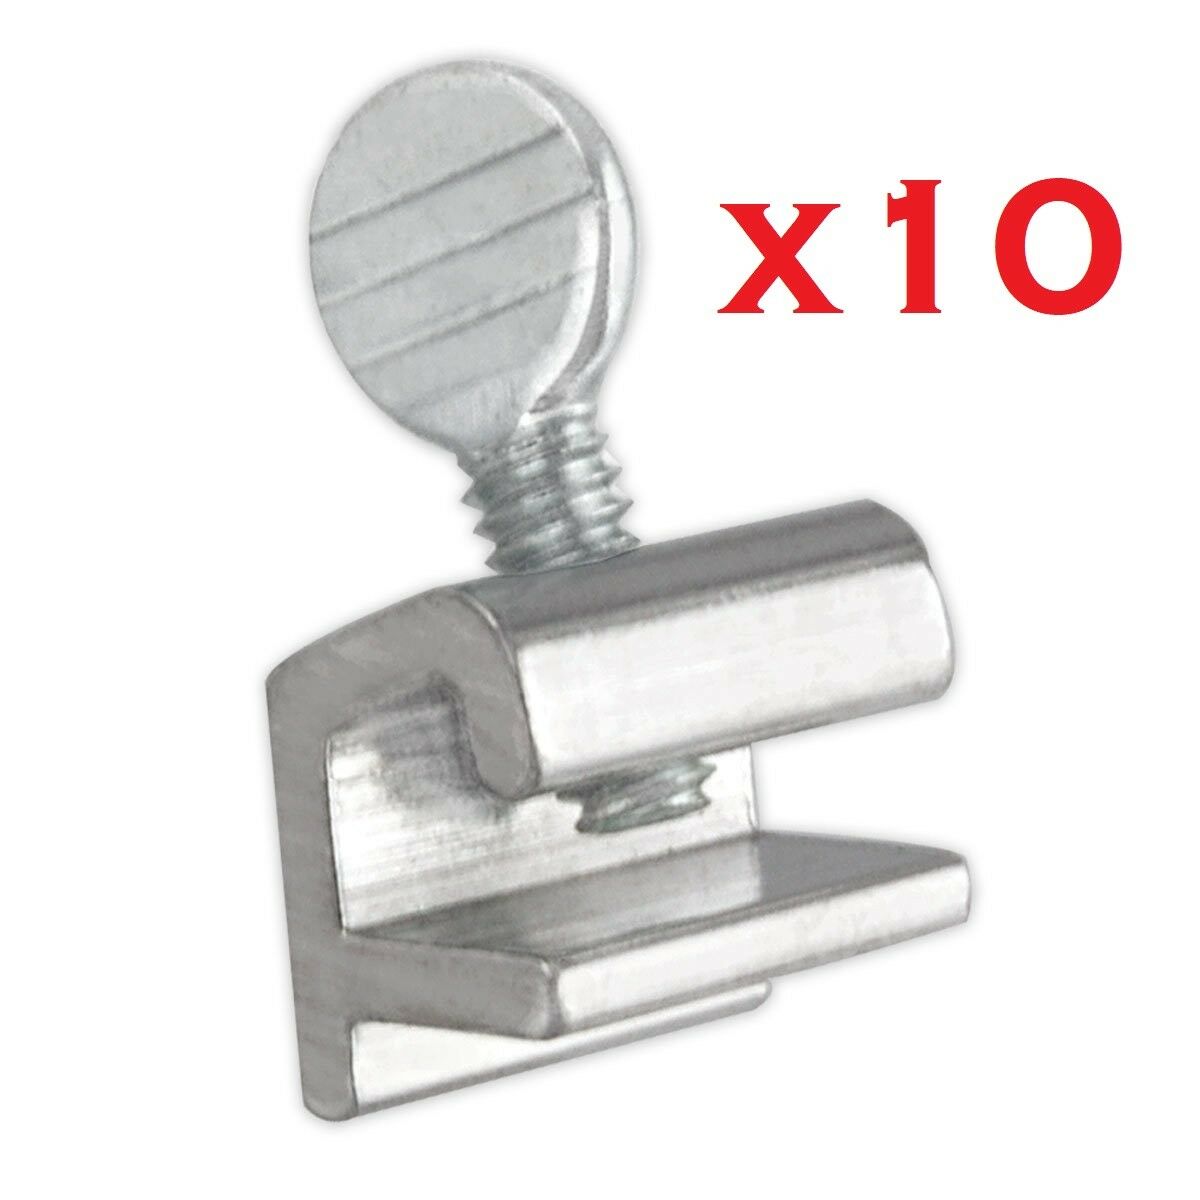 10x Sliding Window Locks Easy Installation High Security Home Lock Thumbscrews